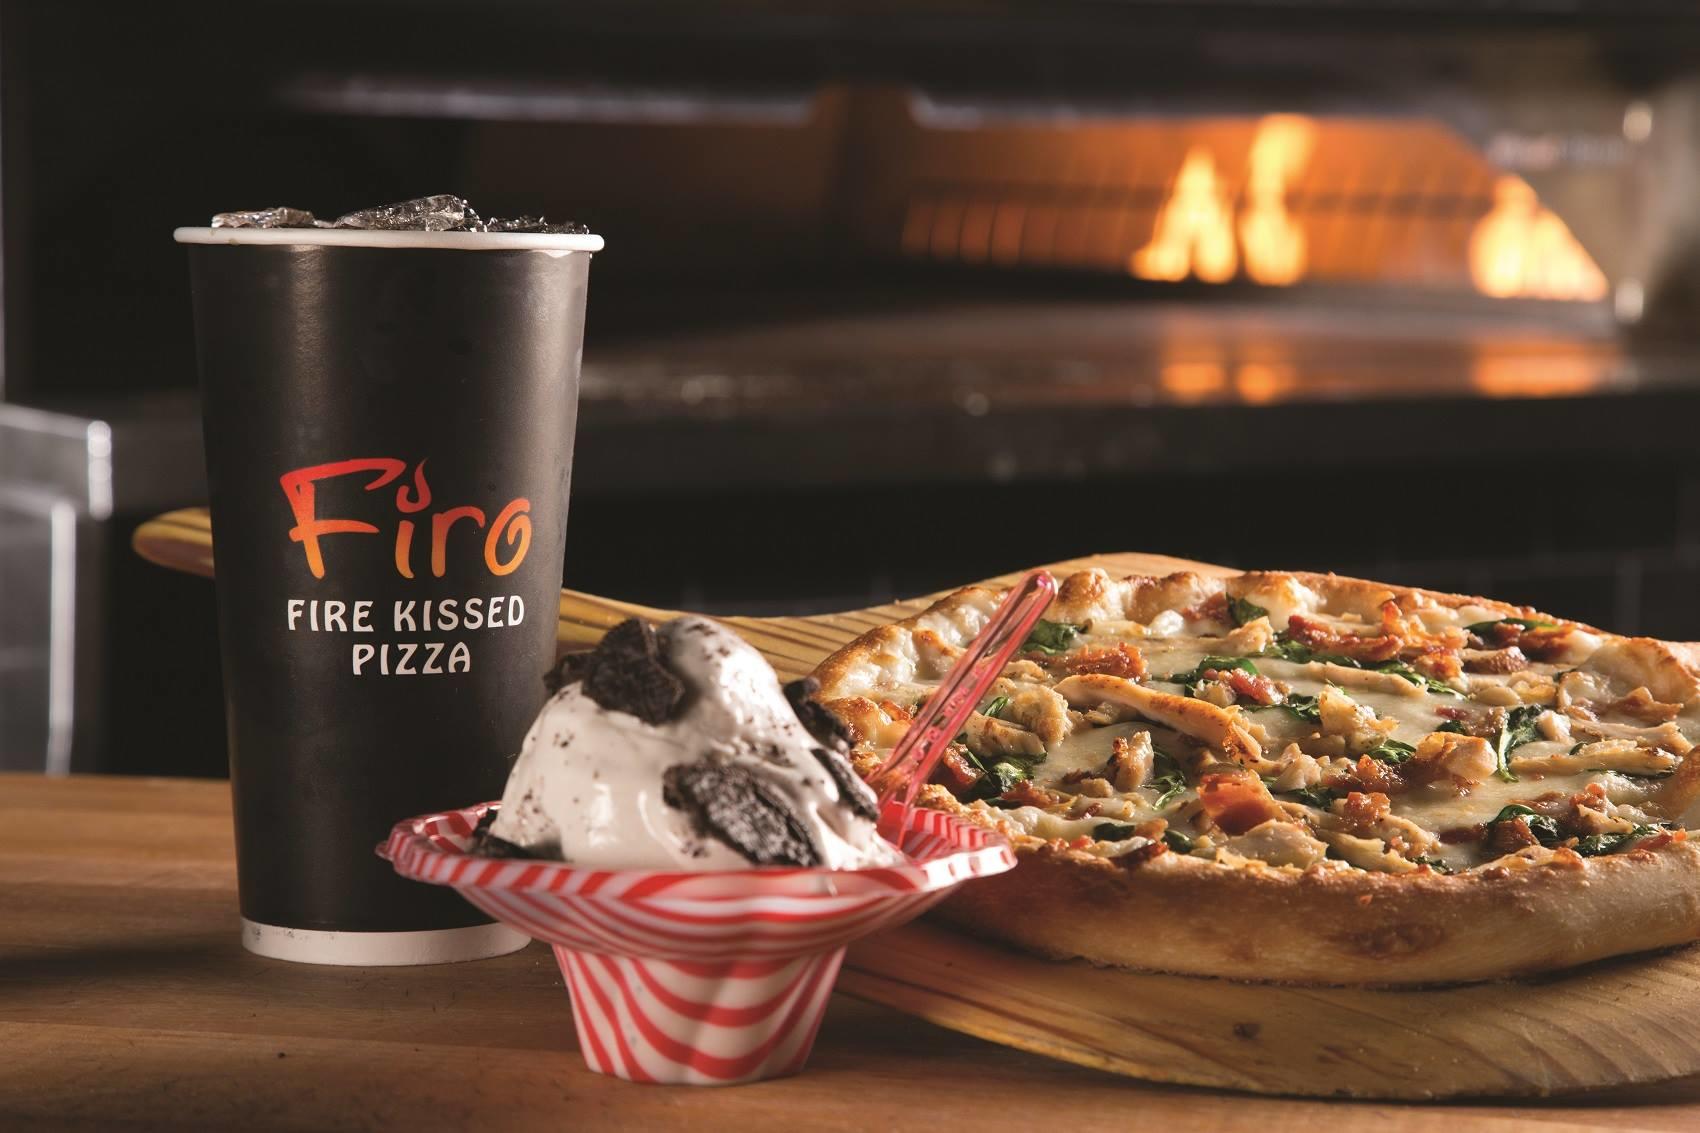 Firo Fire Kissed Pizza Photo